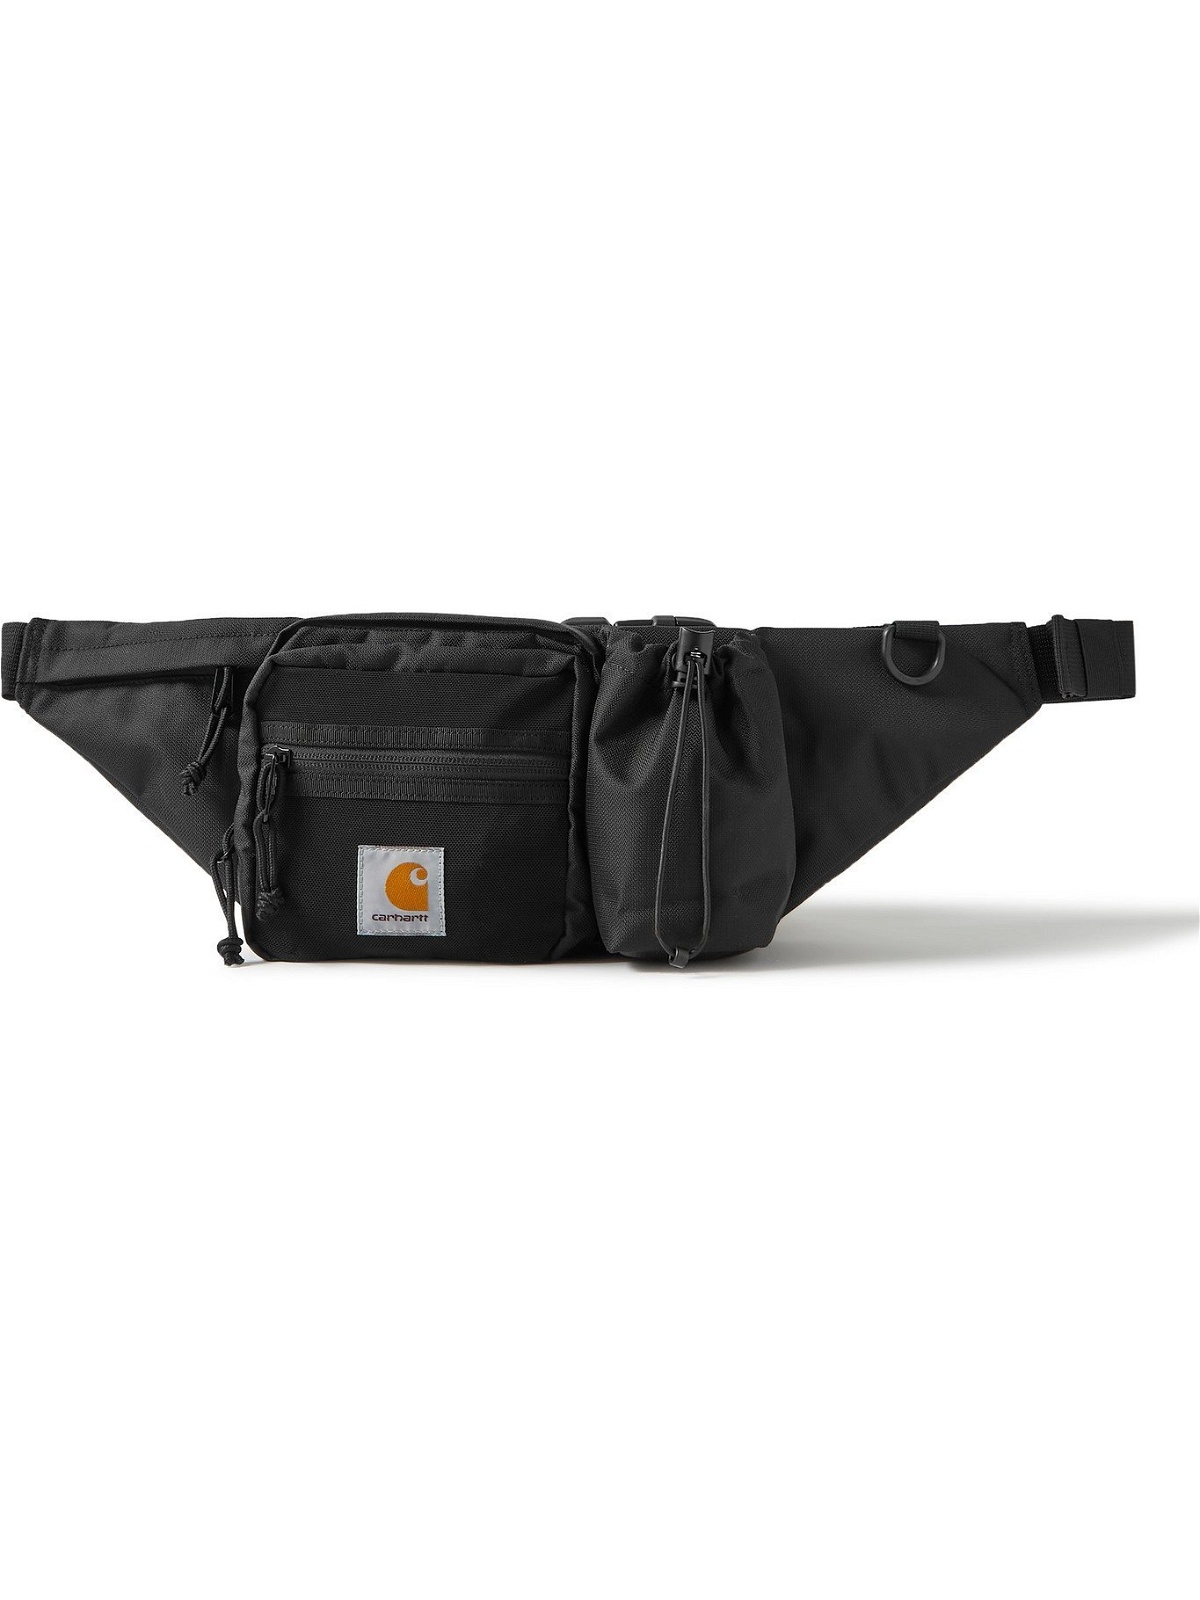 Carhartt WIP Delta Hip Bag